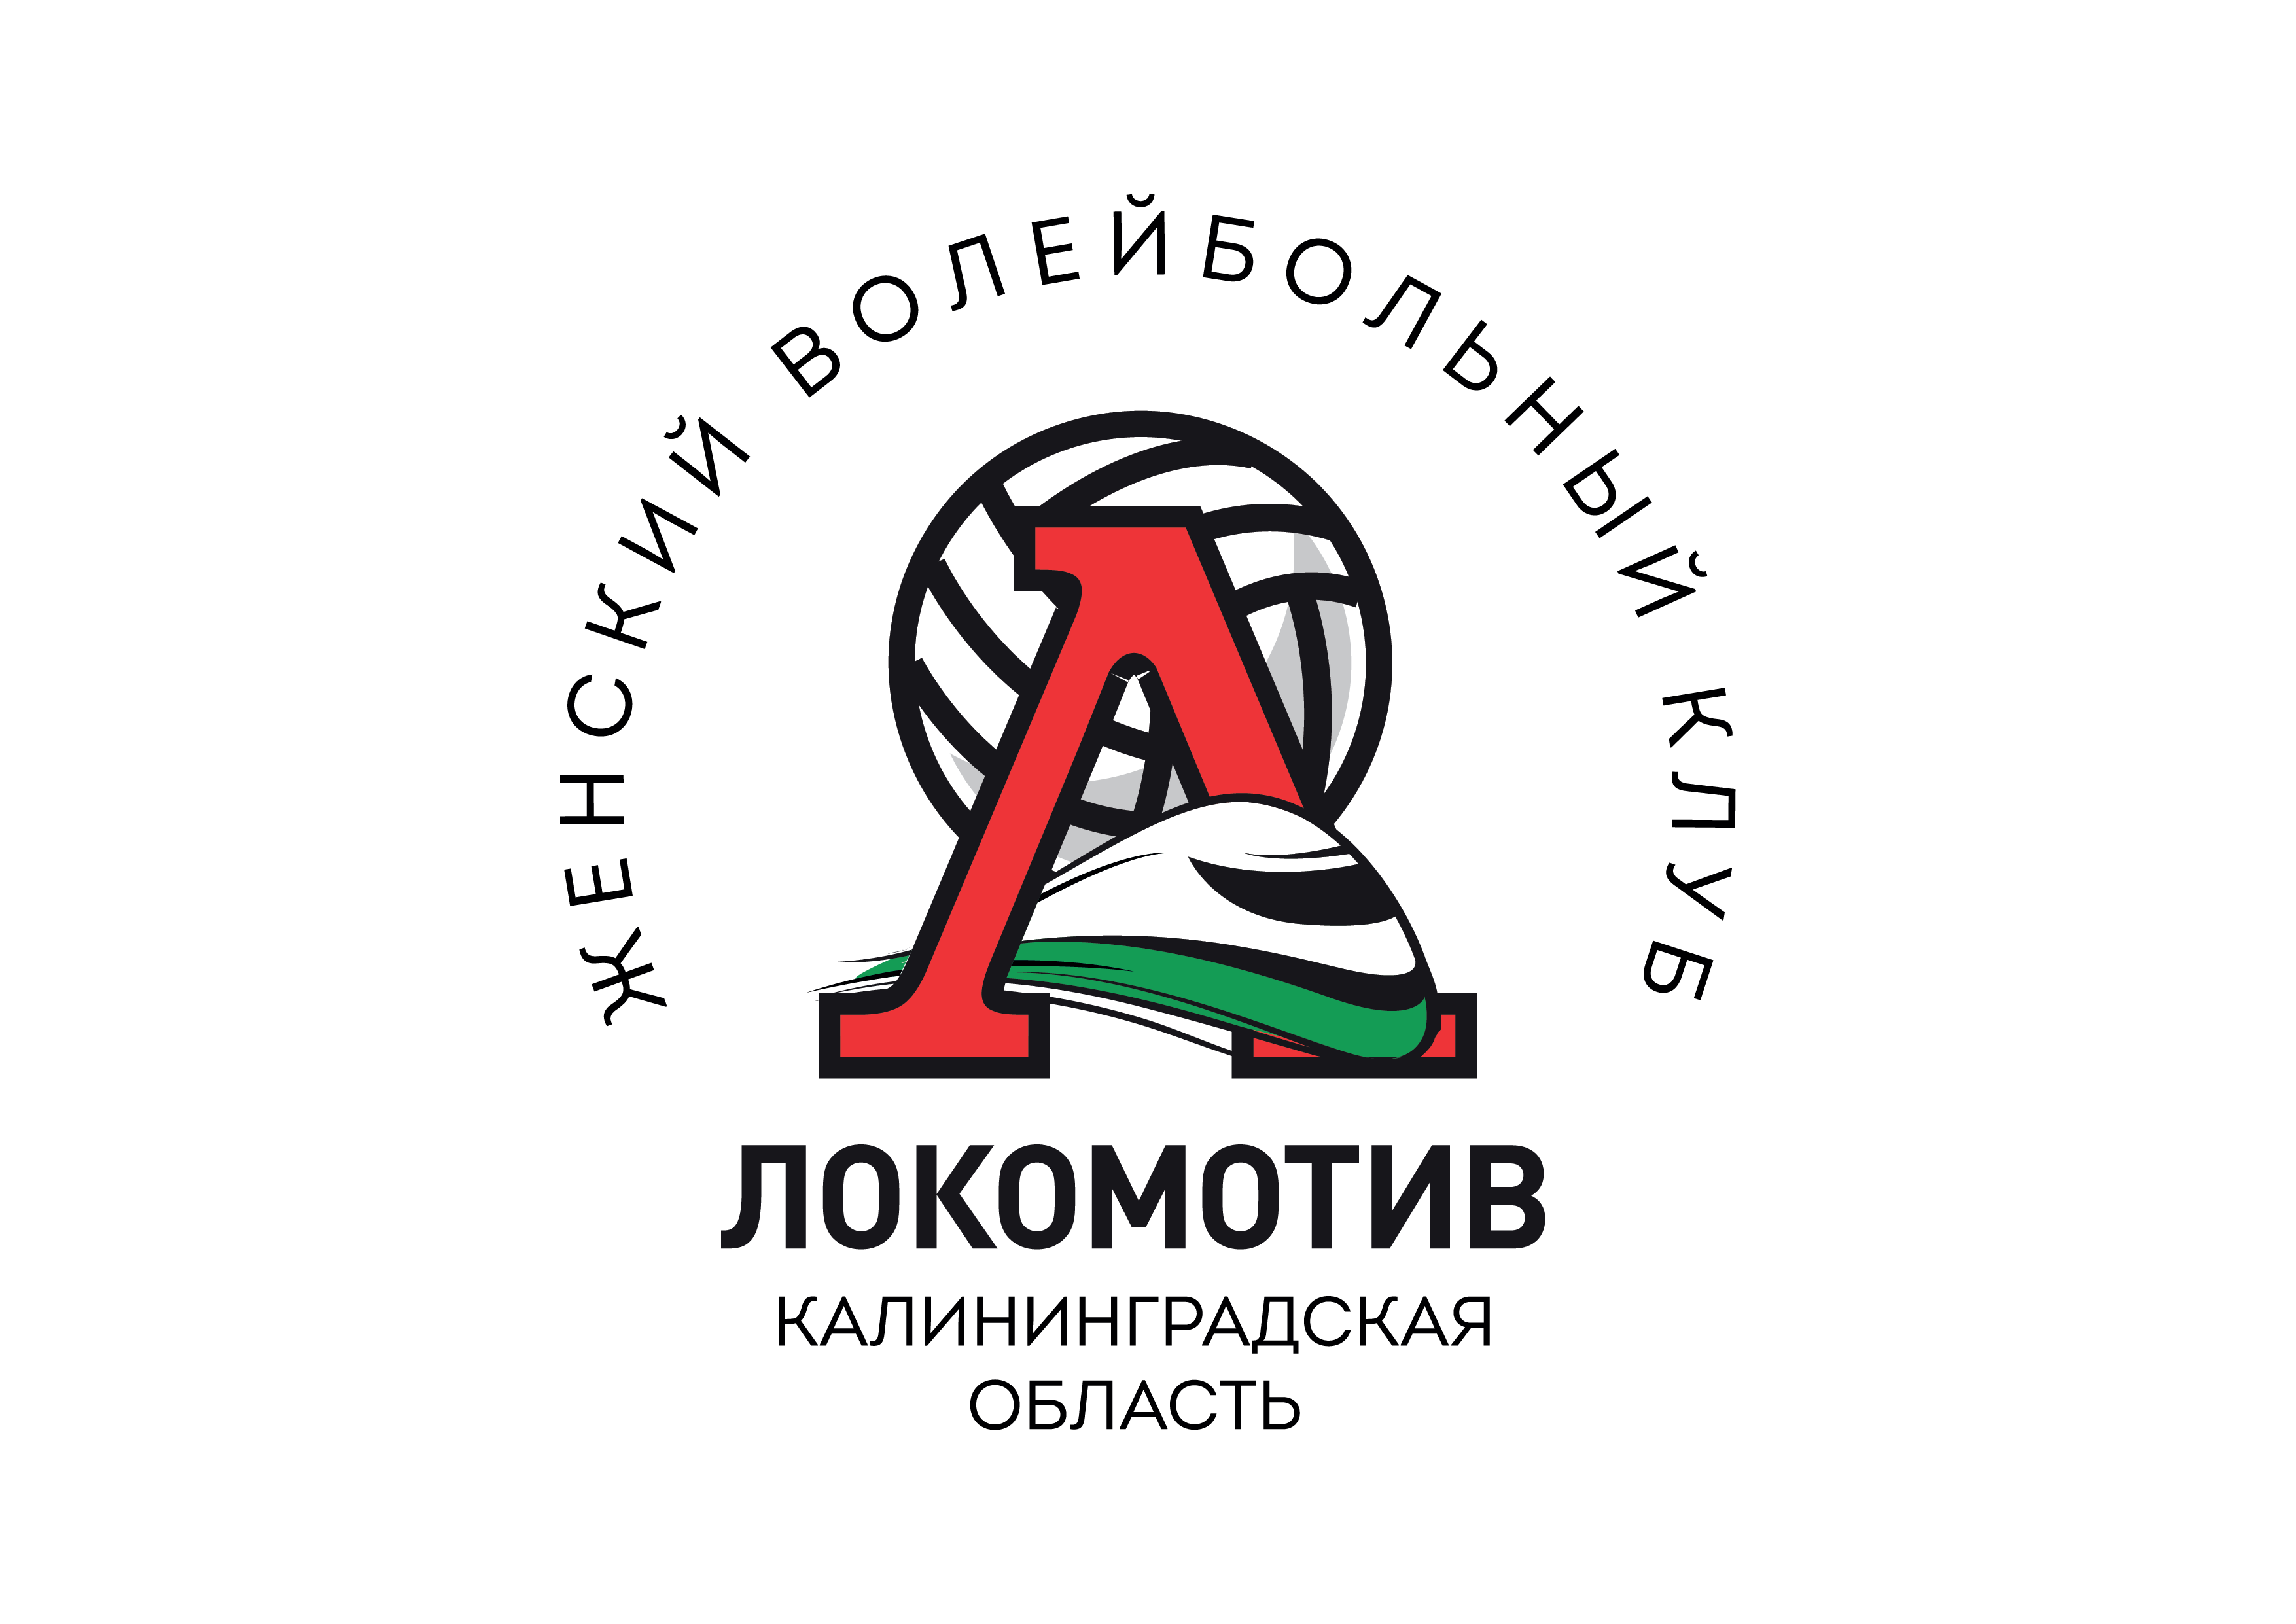 Локомотив - Калининградская обл. логотип